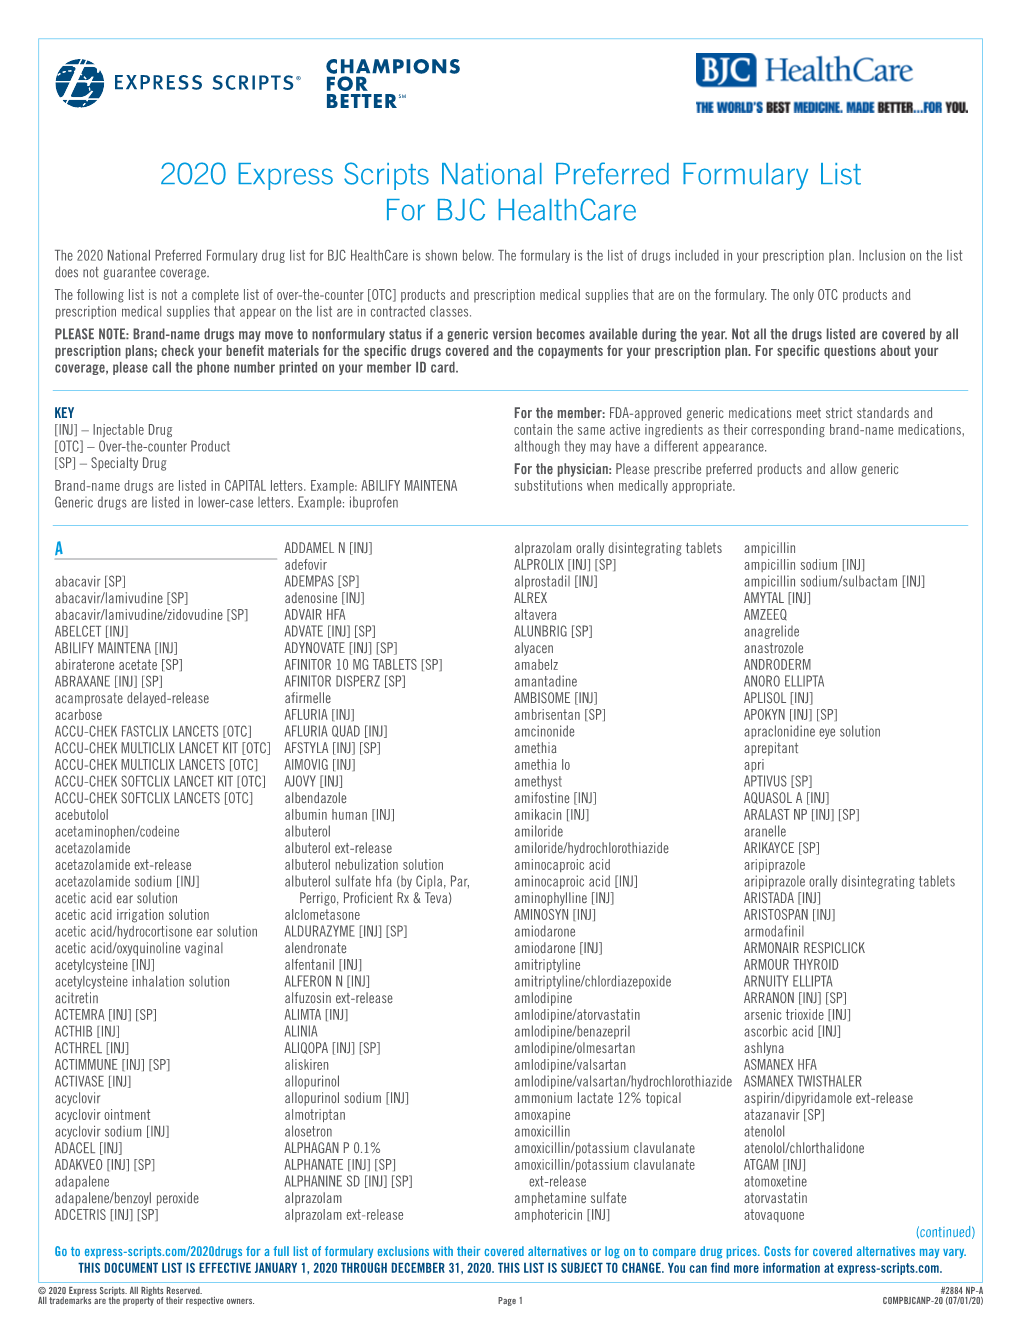 2020 National Preferred Formulary List for BJC Healthcare